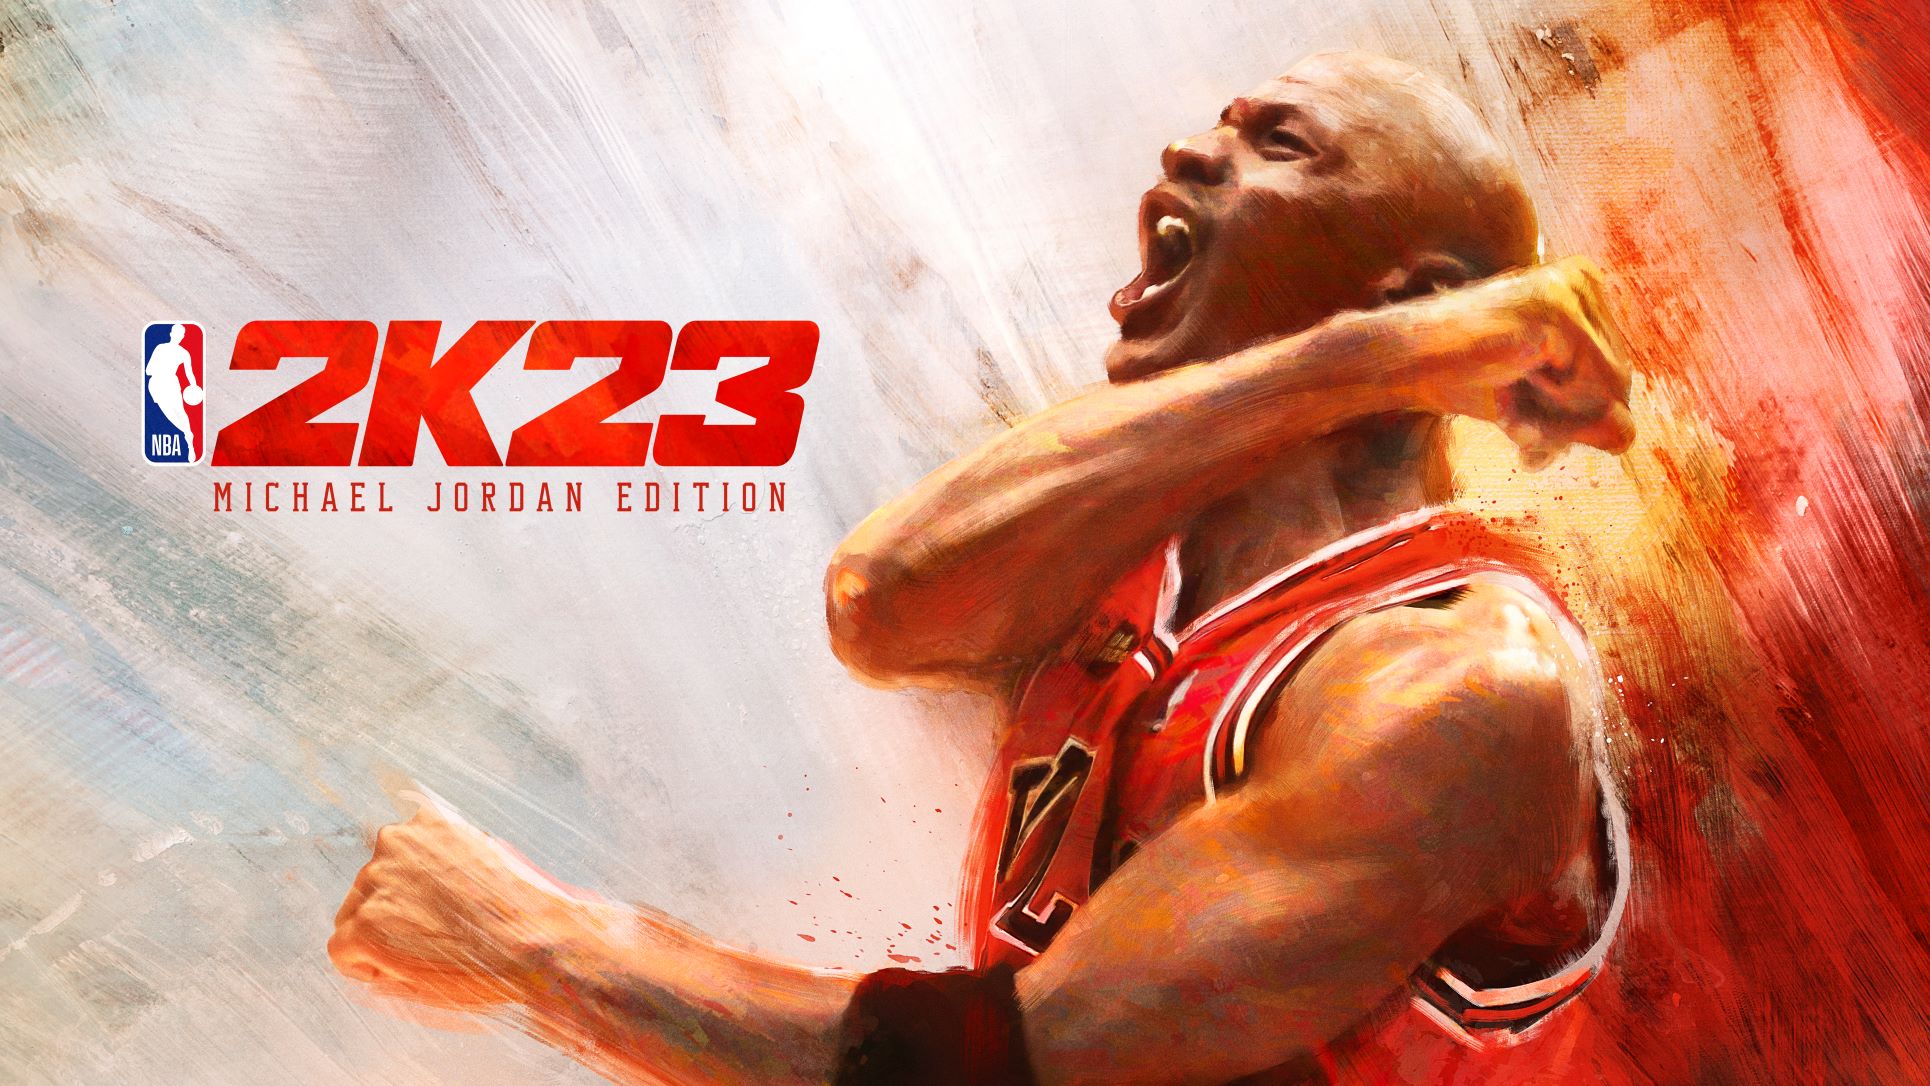 Michael Jordan is back!  - as the cover star of NBA 2K23